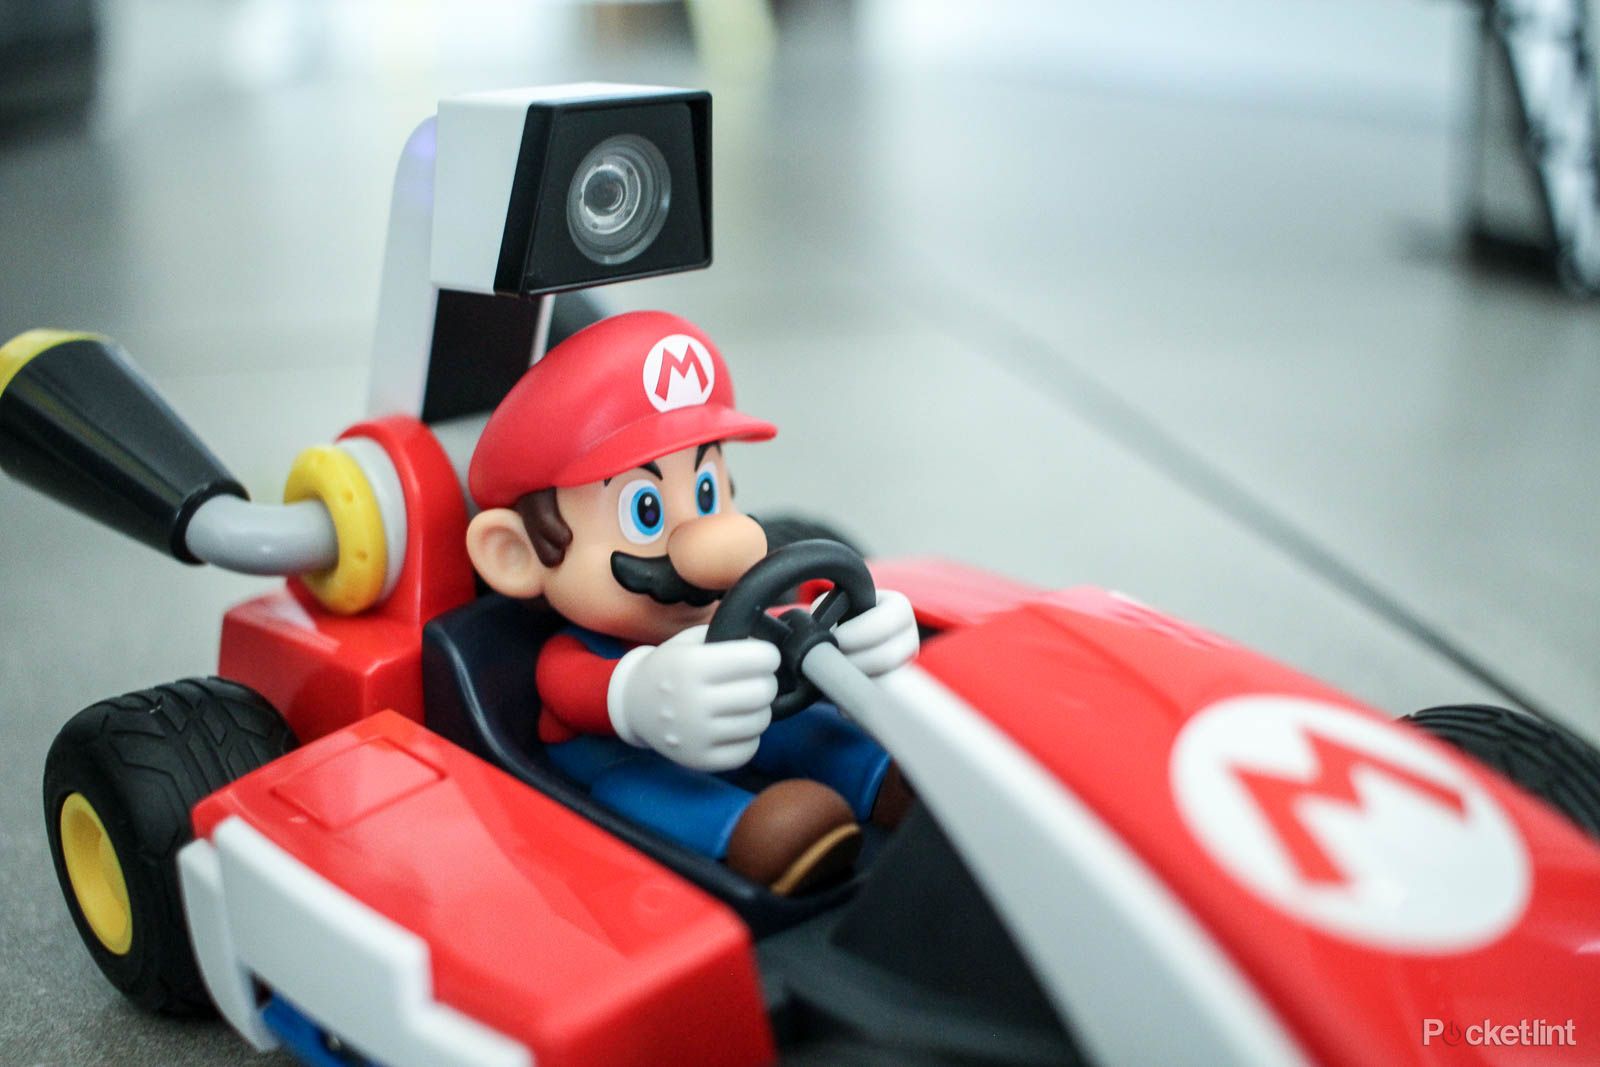 Nintendo Mariokart Live Home Circuit review: photo 3